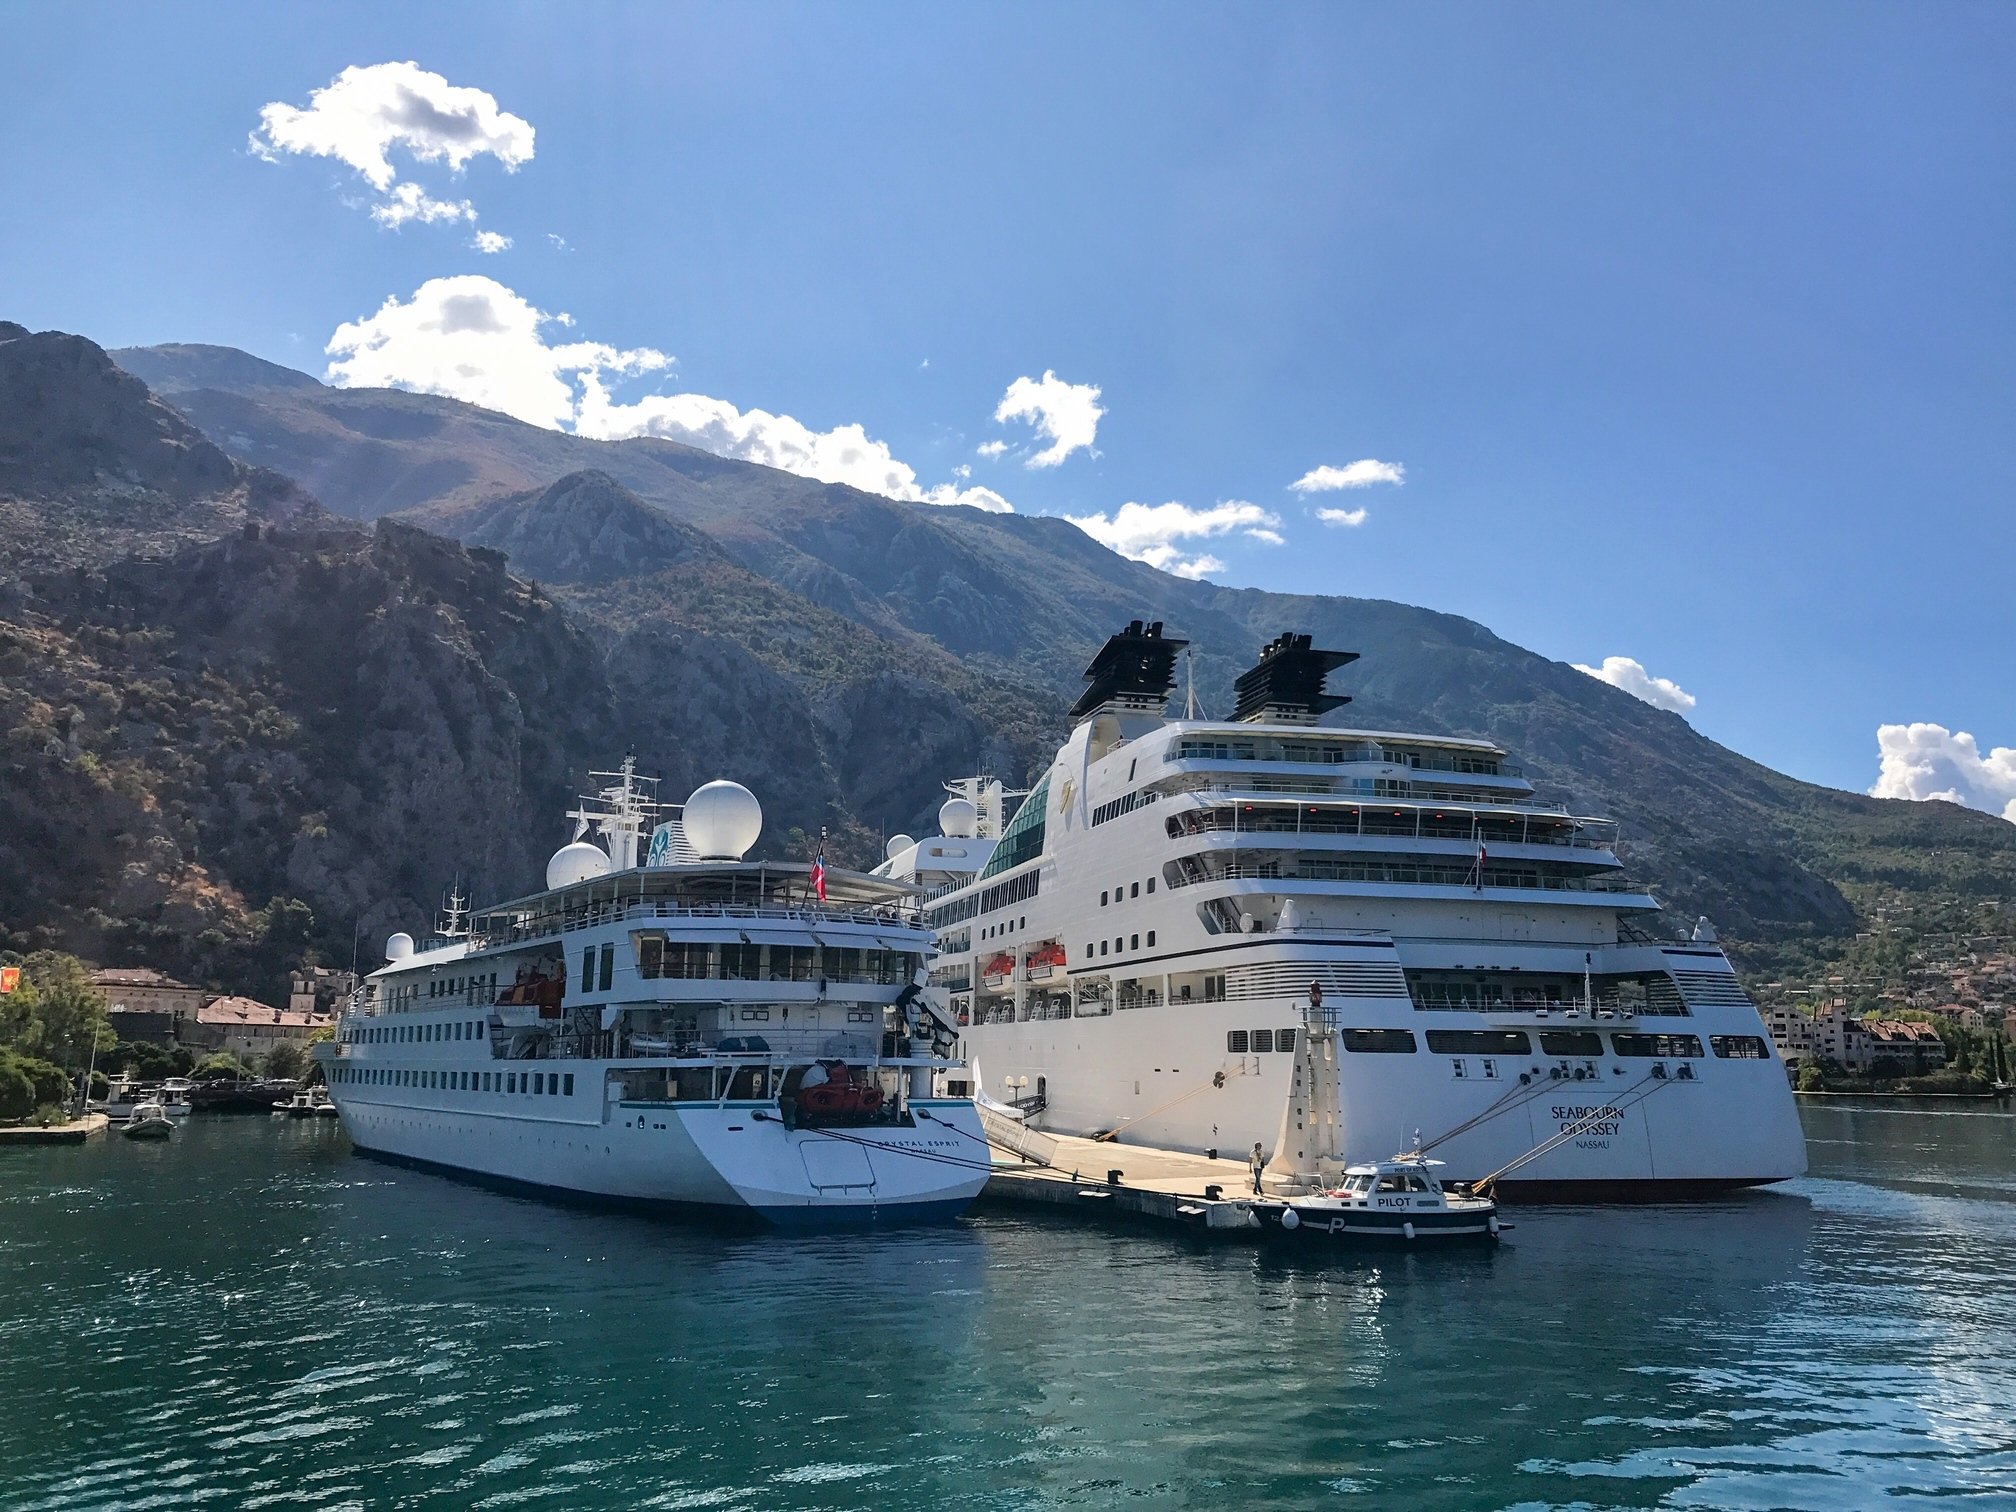 Cruise ships in the bay of Kotor, Montenegro. (Photo by Özge Şengelen)